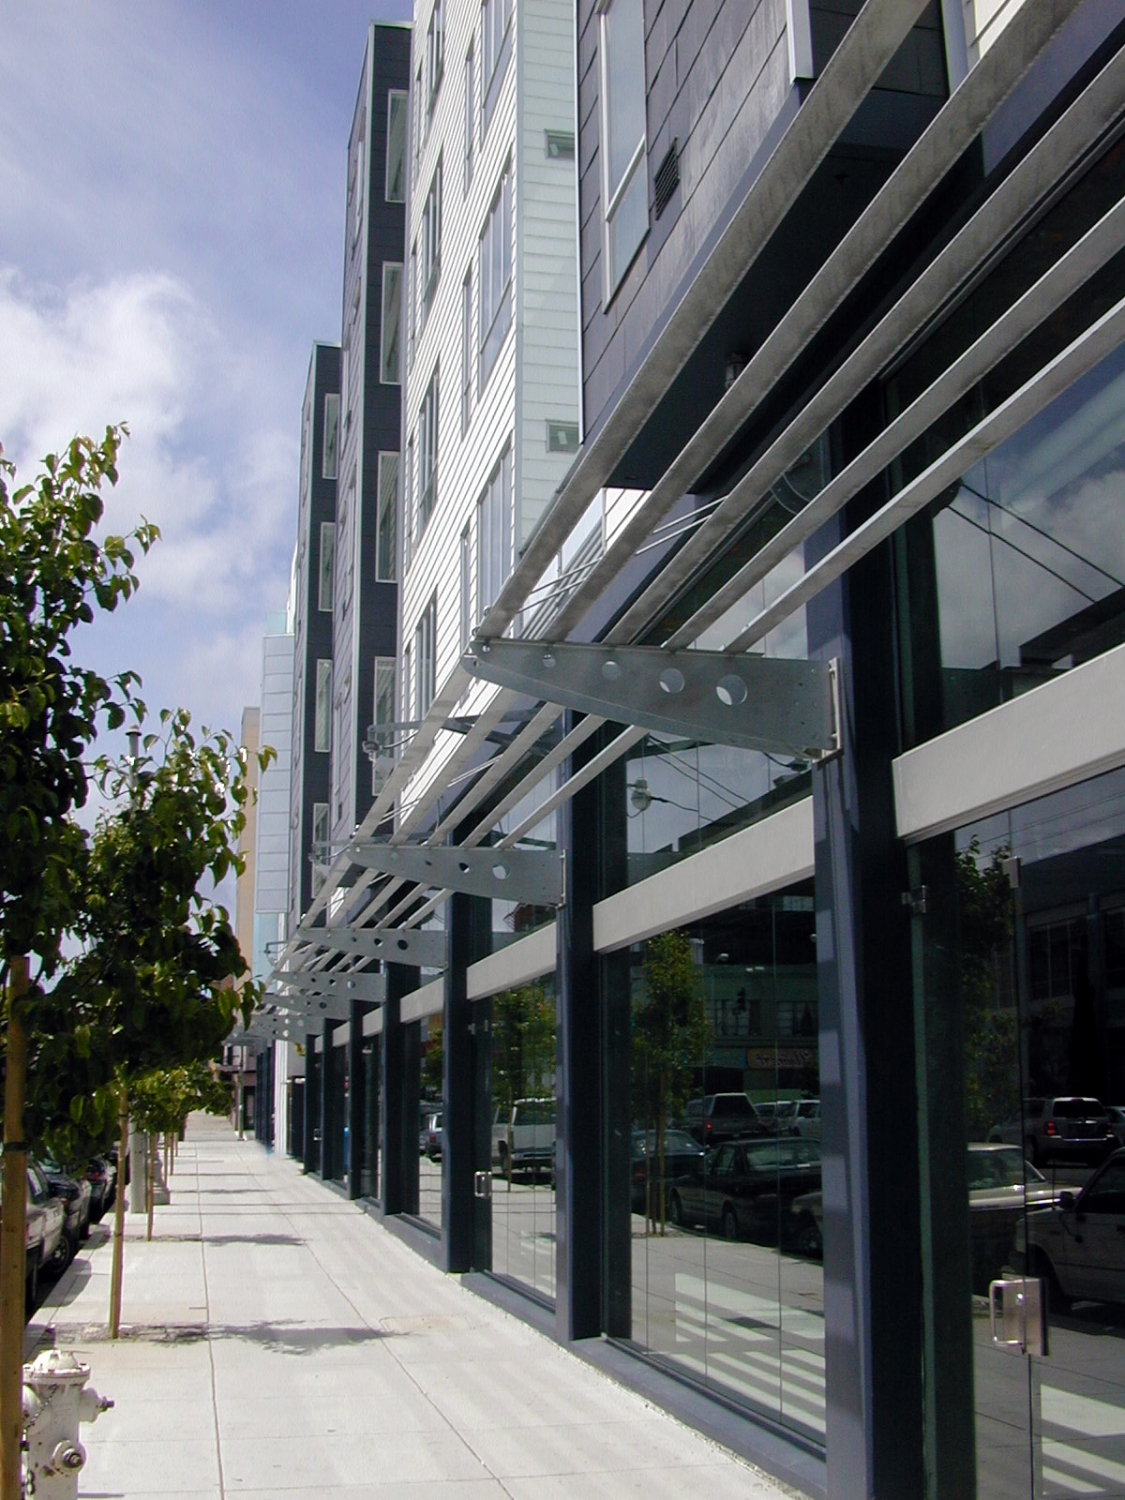 Detail of retail windows and awnings at 8th & Howard/SOMA Studios in San Francisco, Ca.